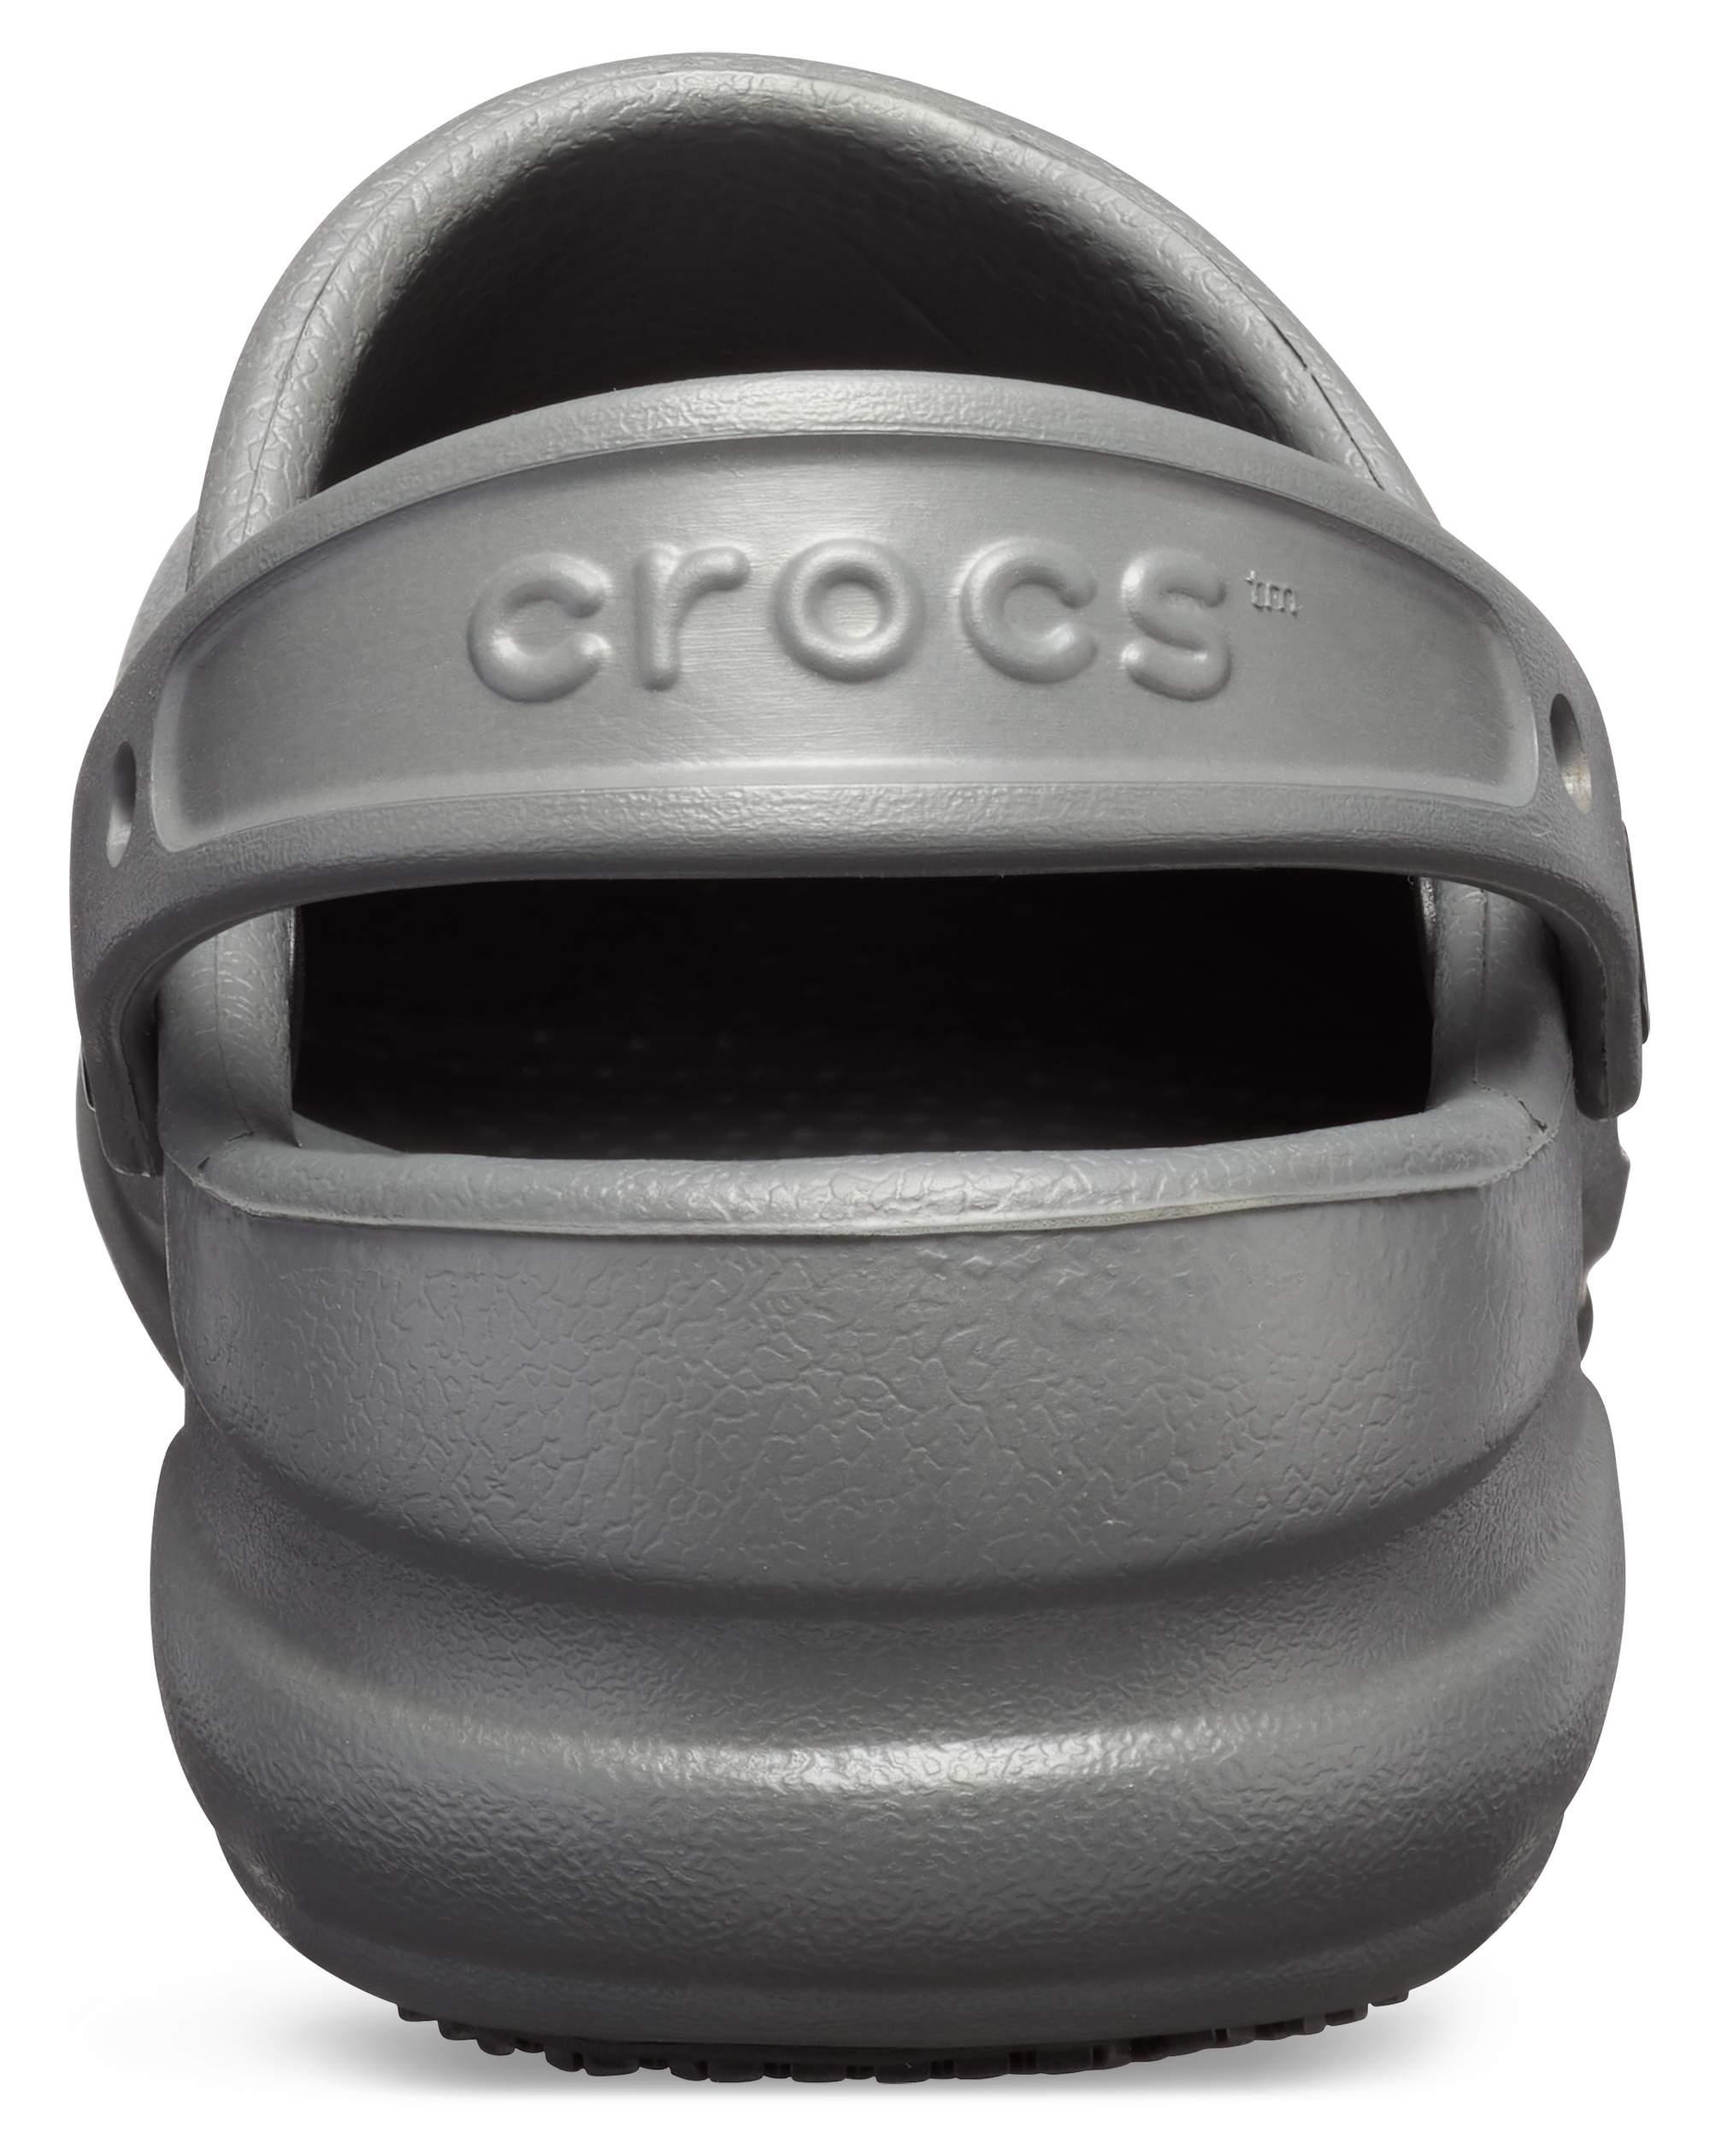 safety crocs uk